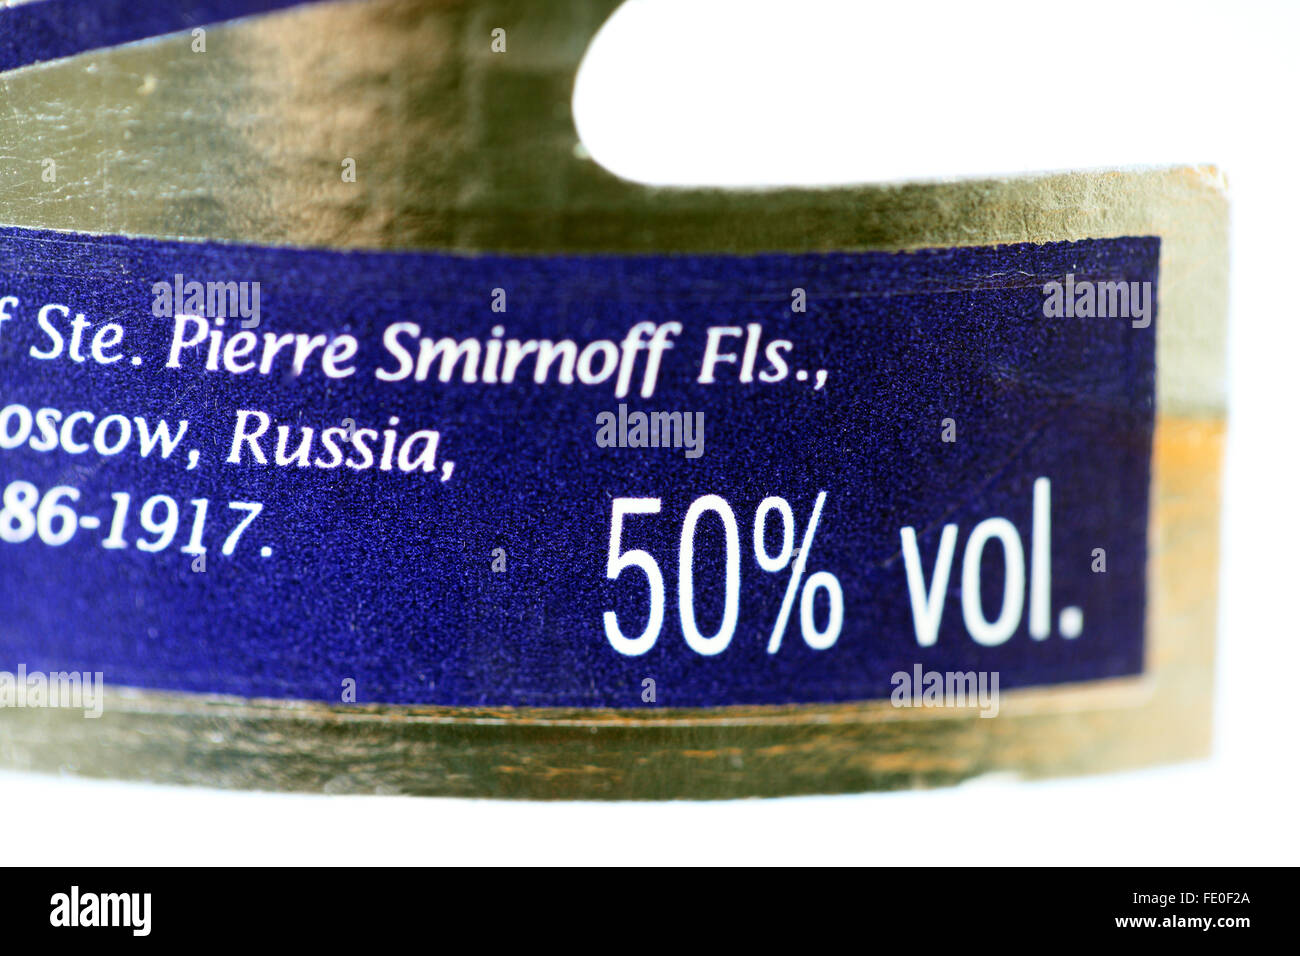 Label of bottle of Alamy Photo blue Vokda - 50% showing label volume Smirnoff Stock